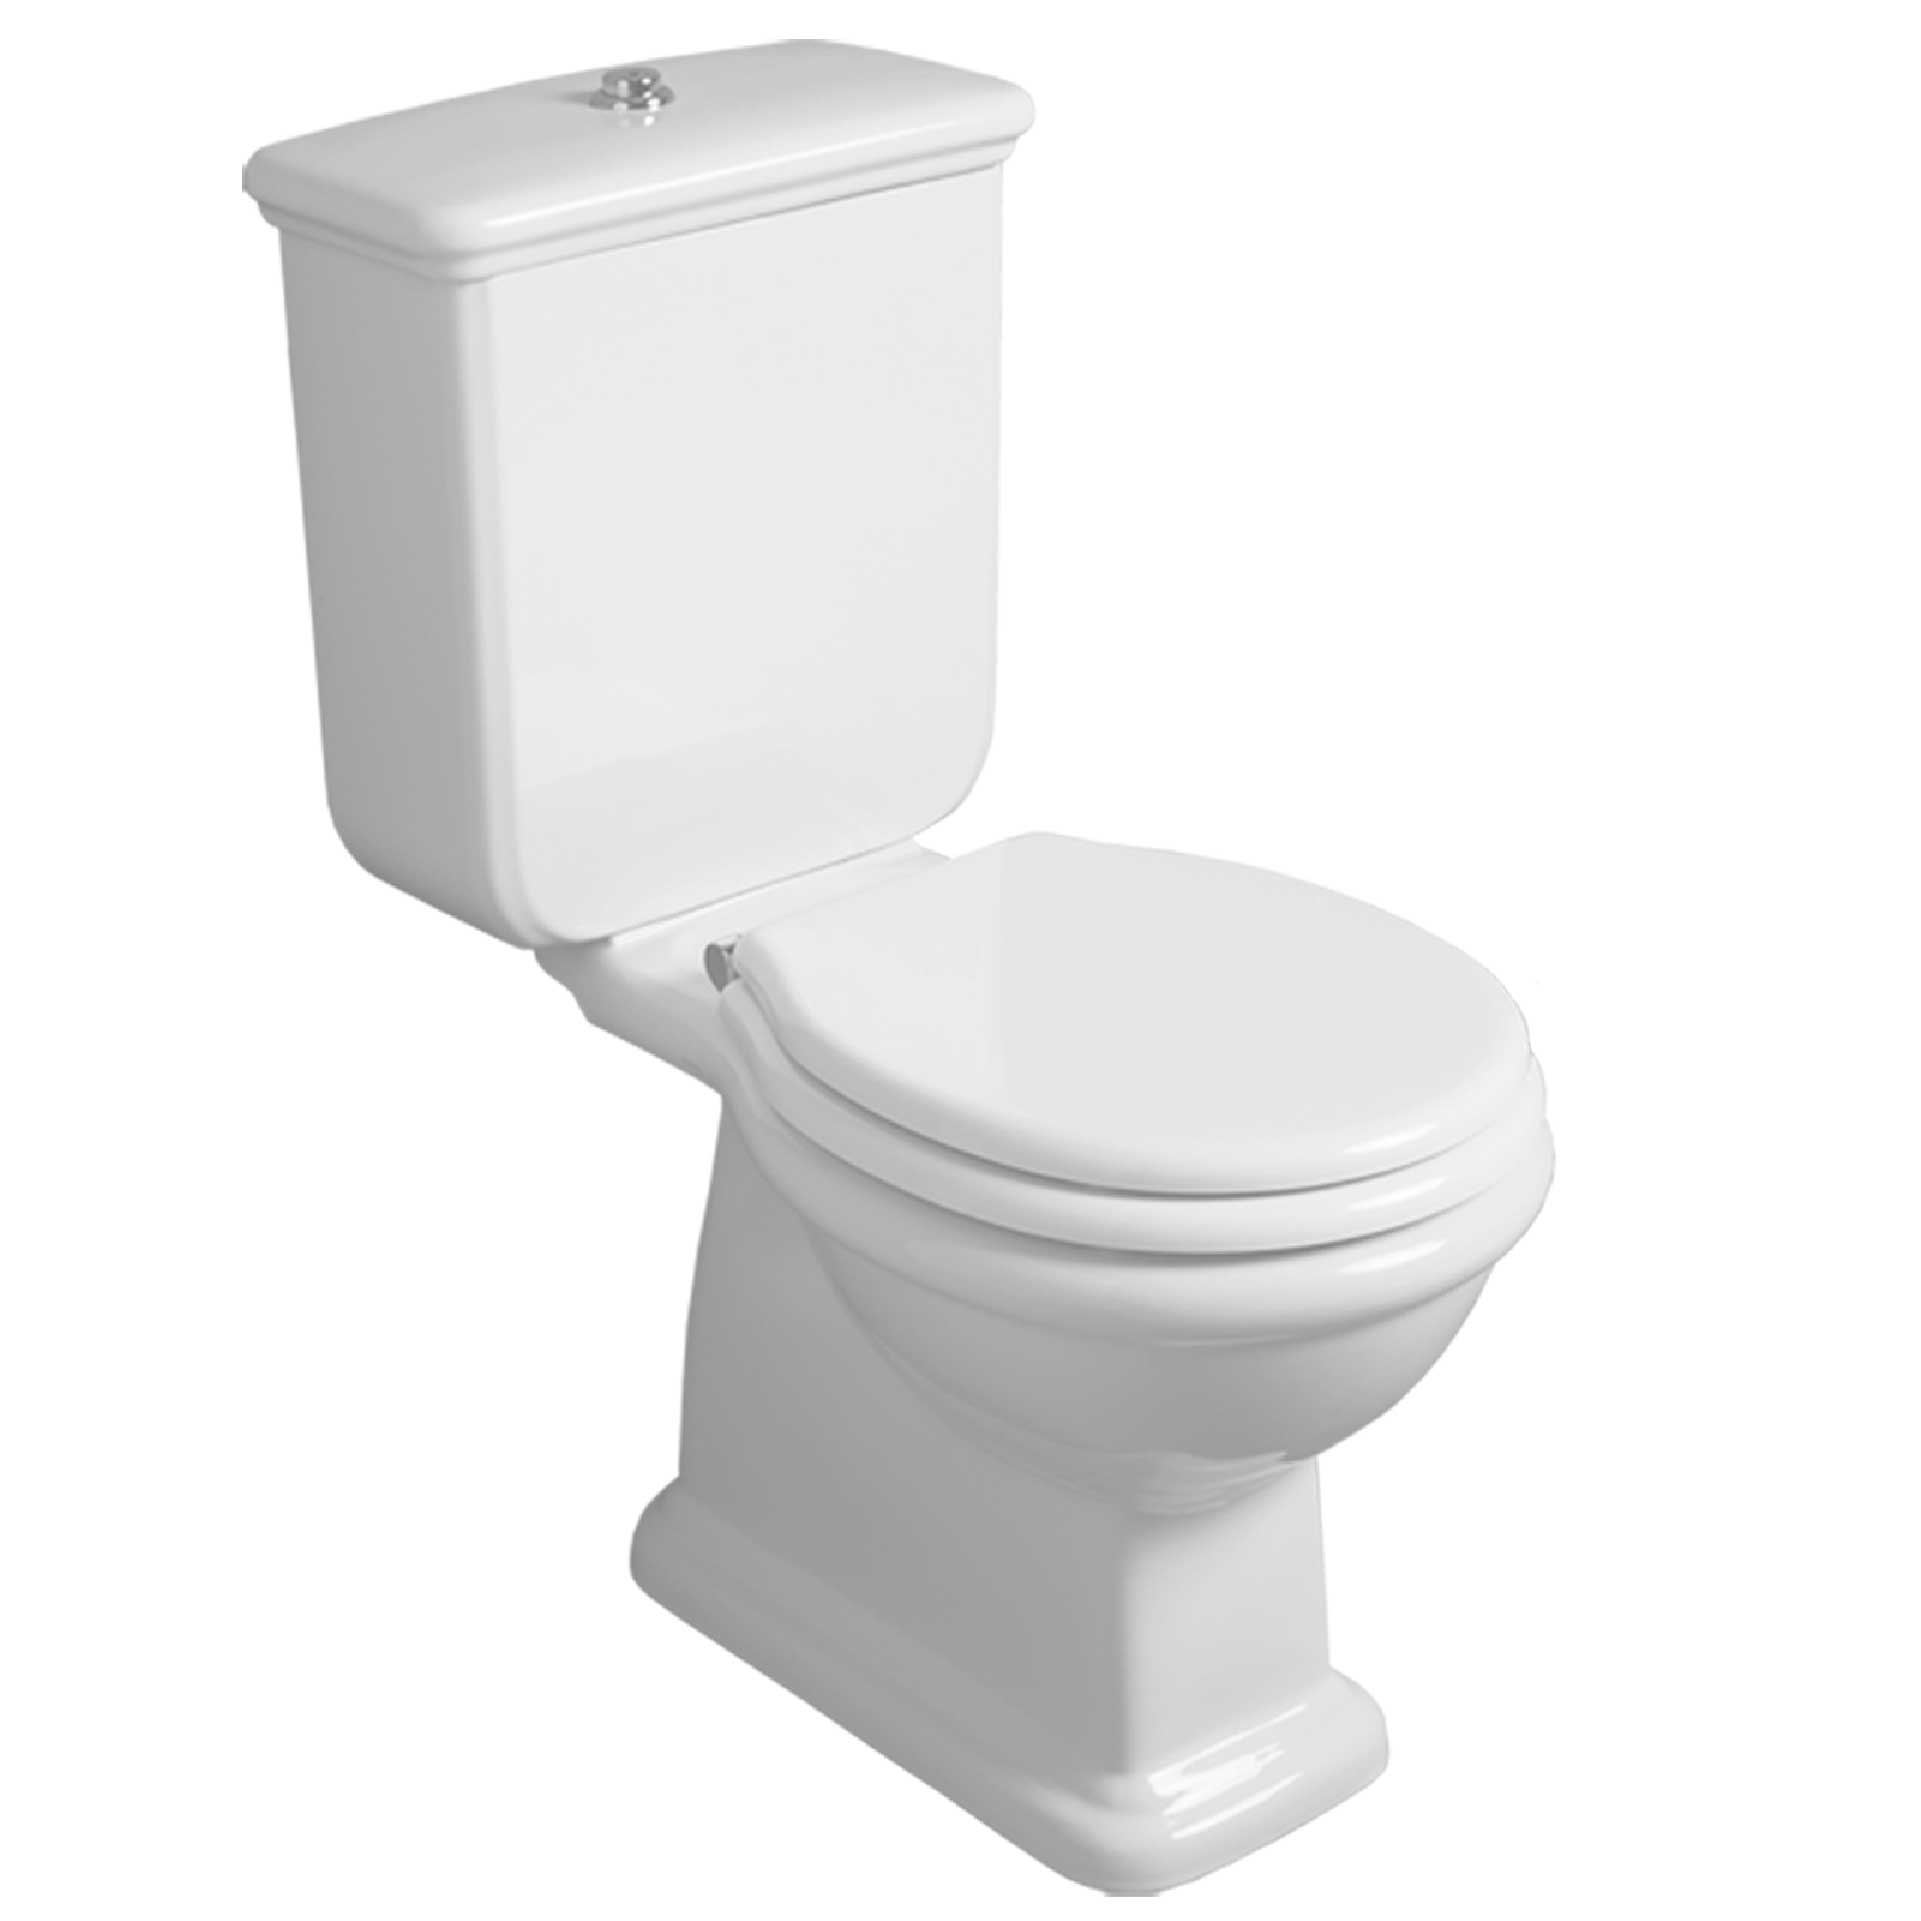 WCB-8C100 Free-standing toilet bowl